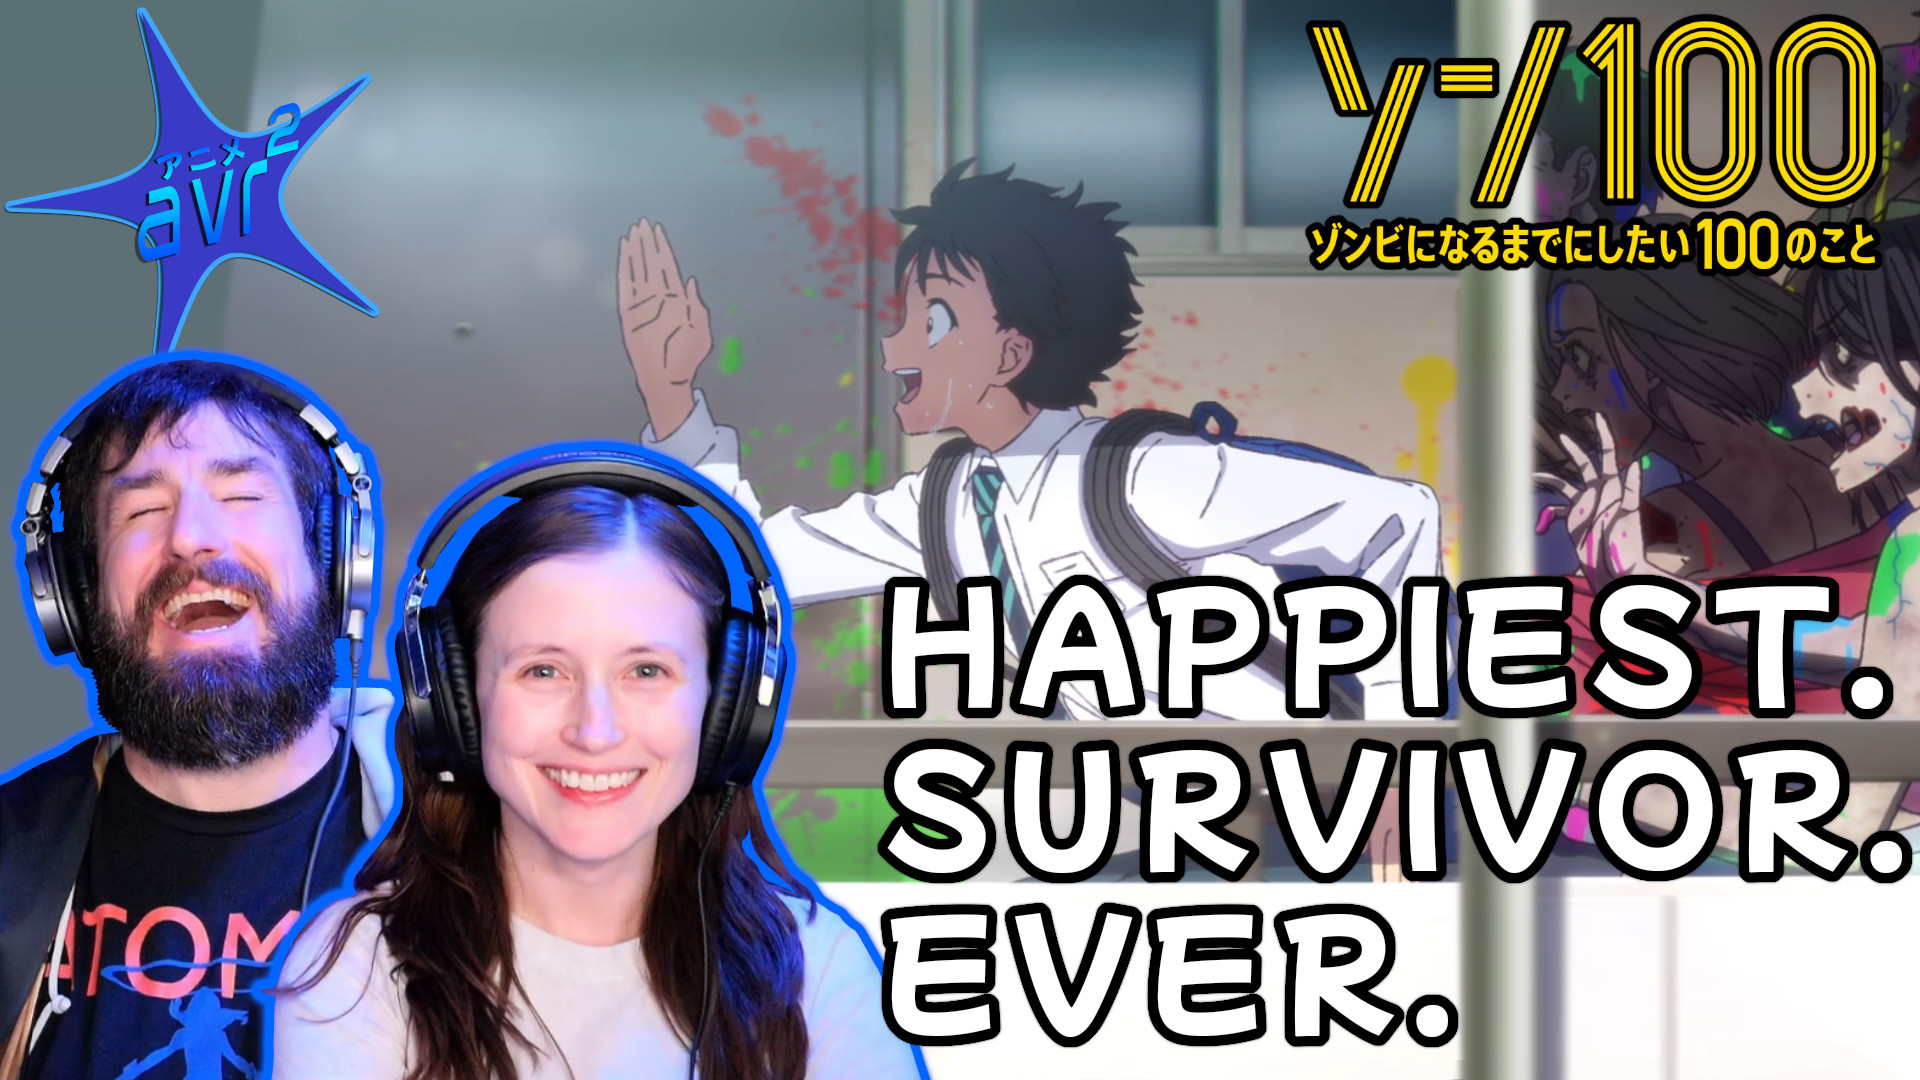 Zom 100 Episode 1 Reaction: The Happiest Apocalypse Survivor | AVR2